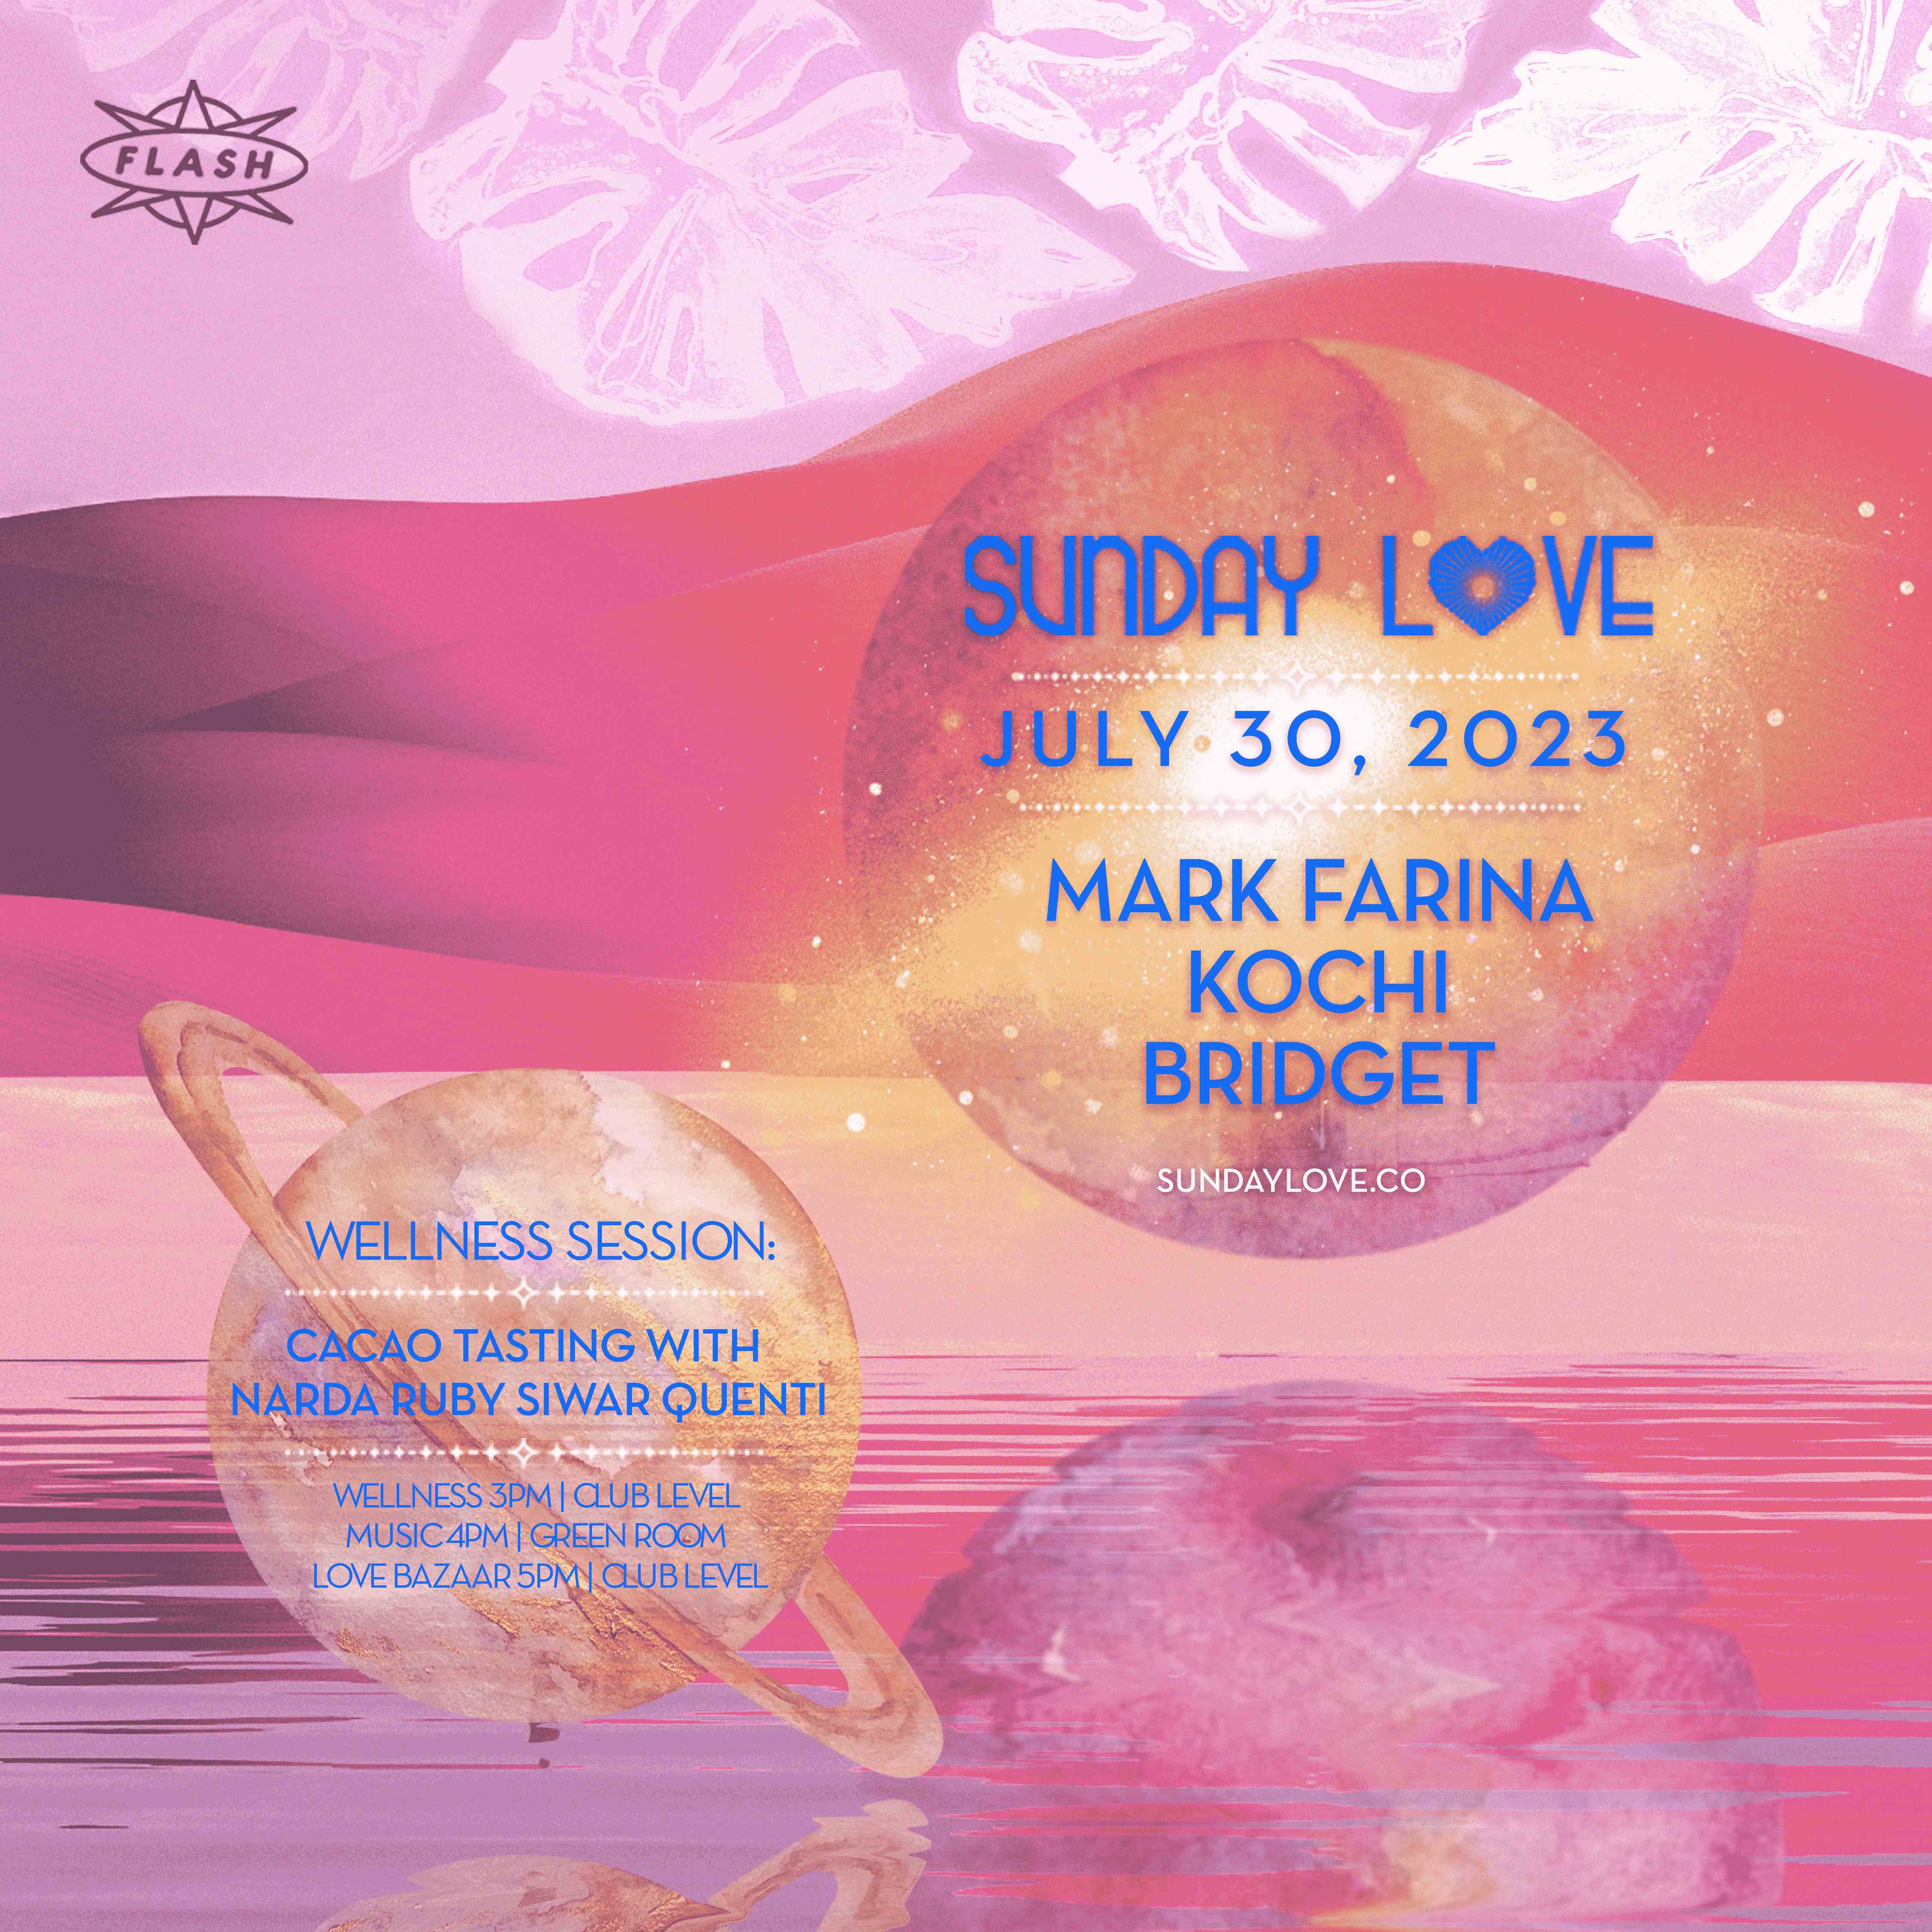 Sunday Love: Mark Farina - Kochi - Bridget event flyer